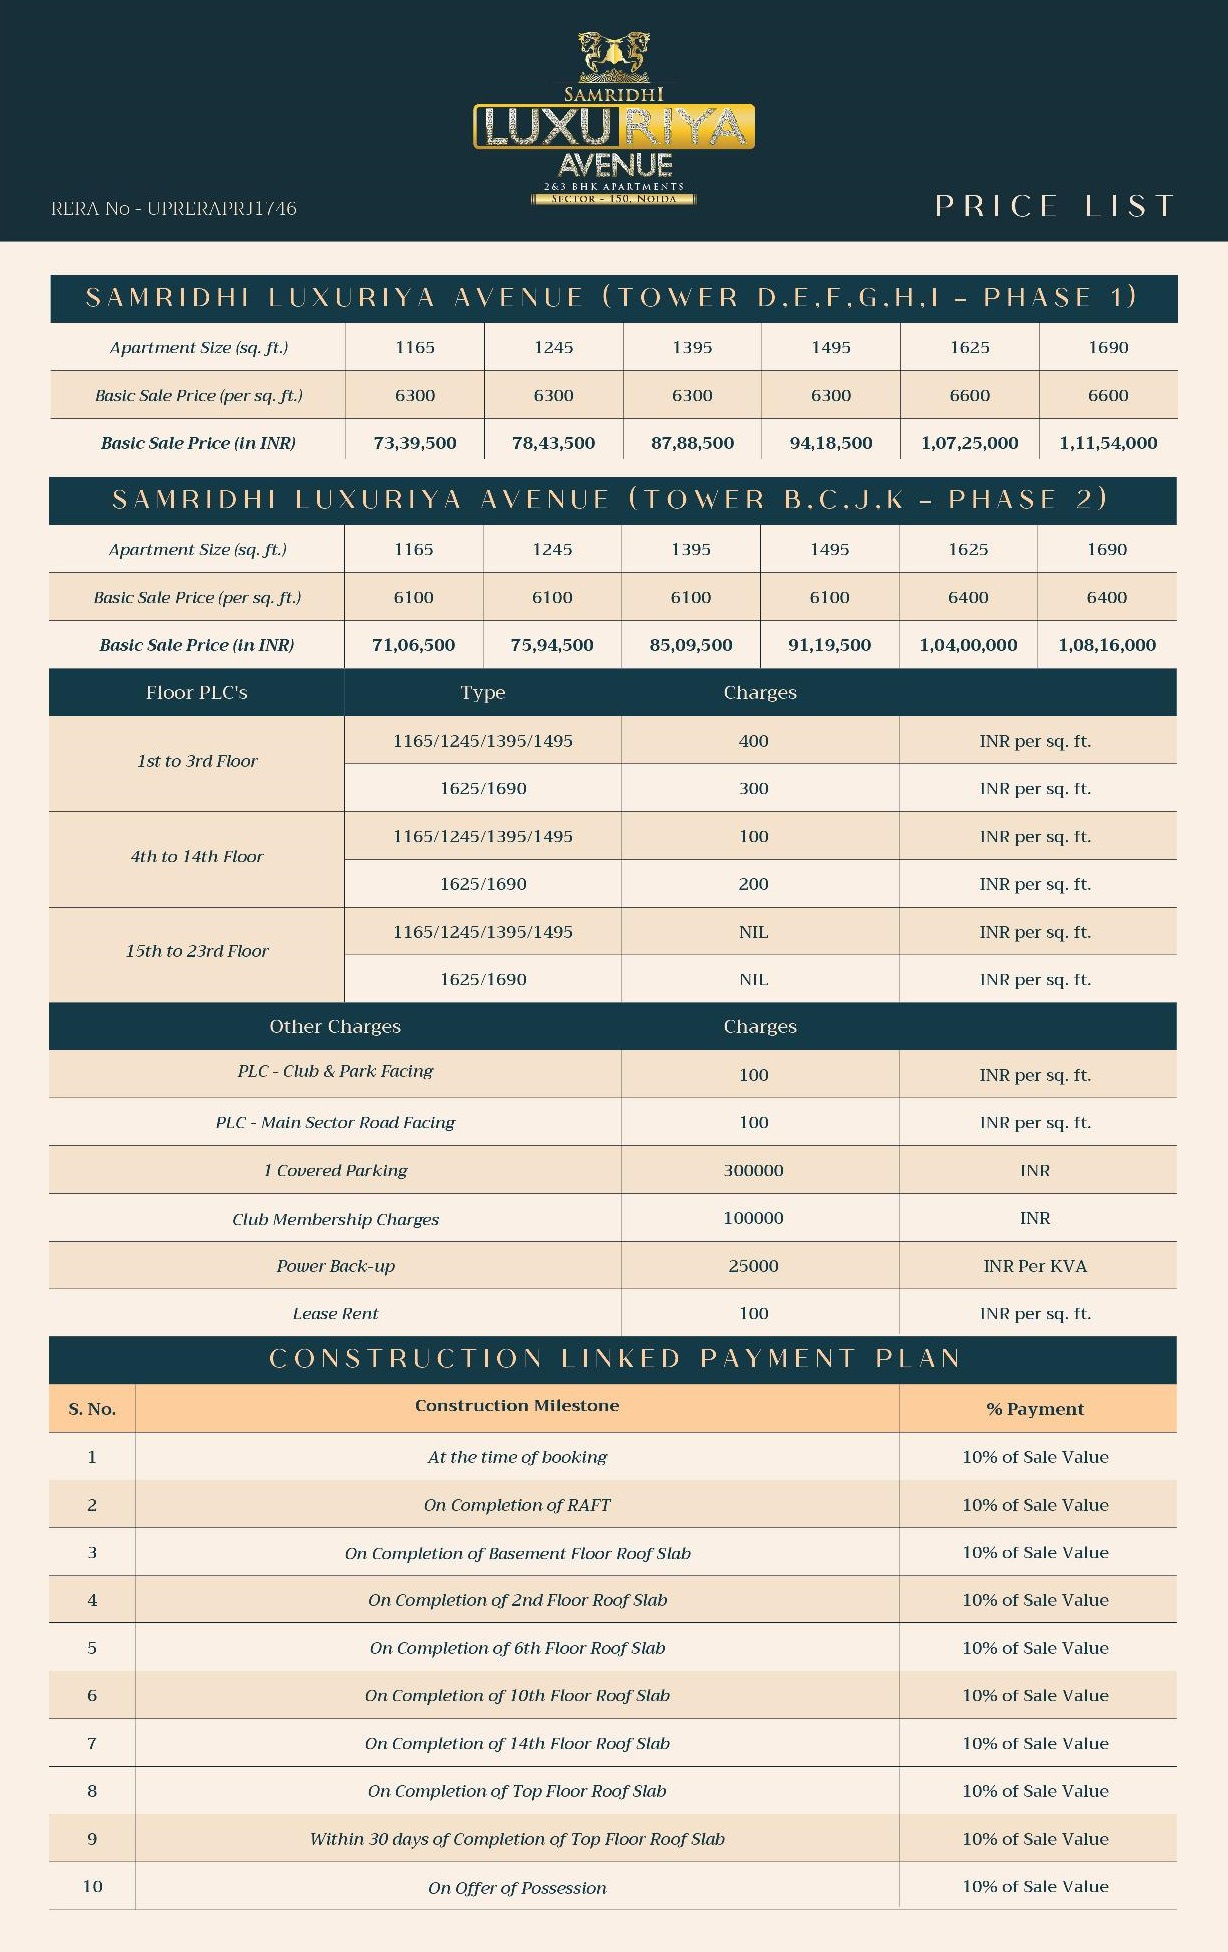 Samridhi Luxuriya Avenue Price List